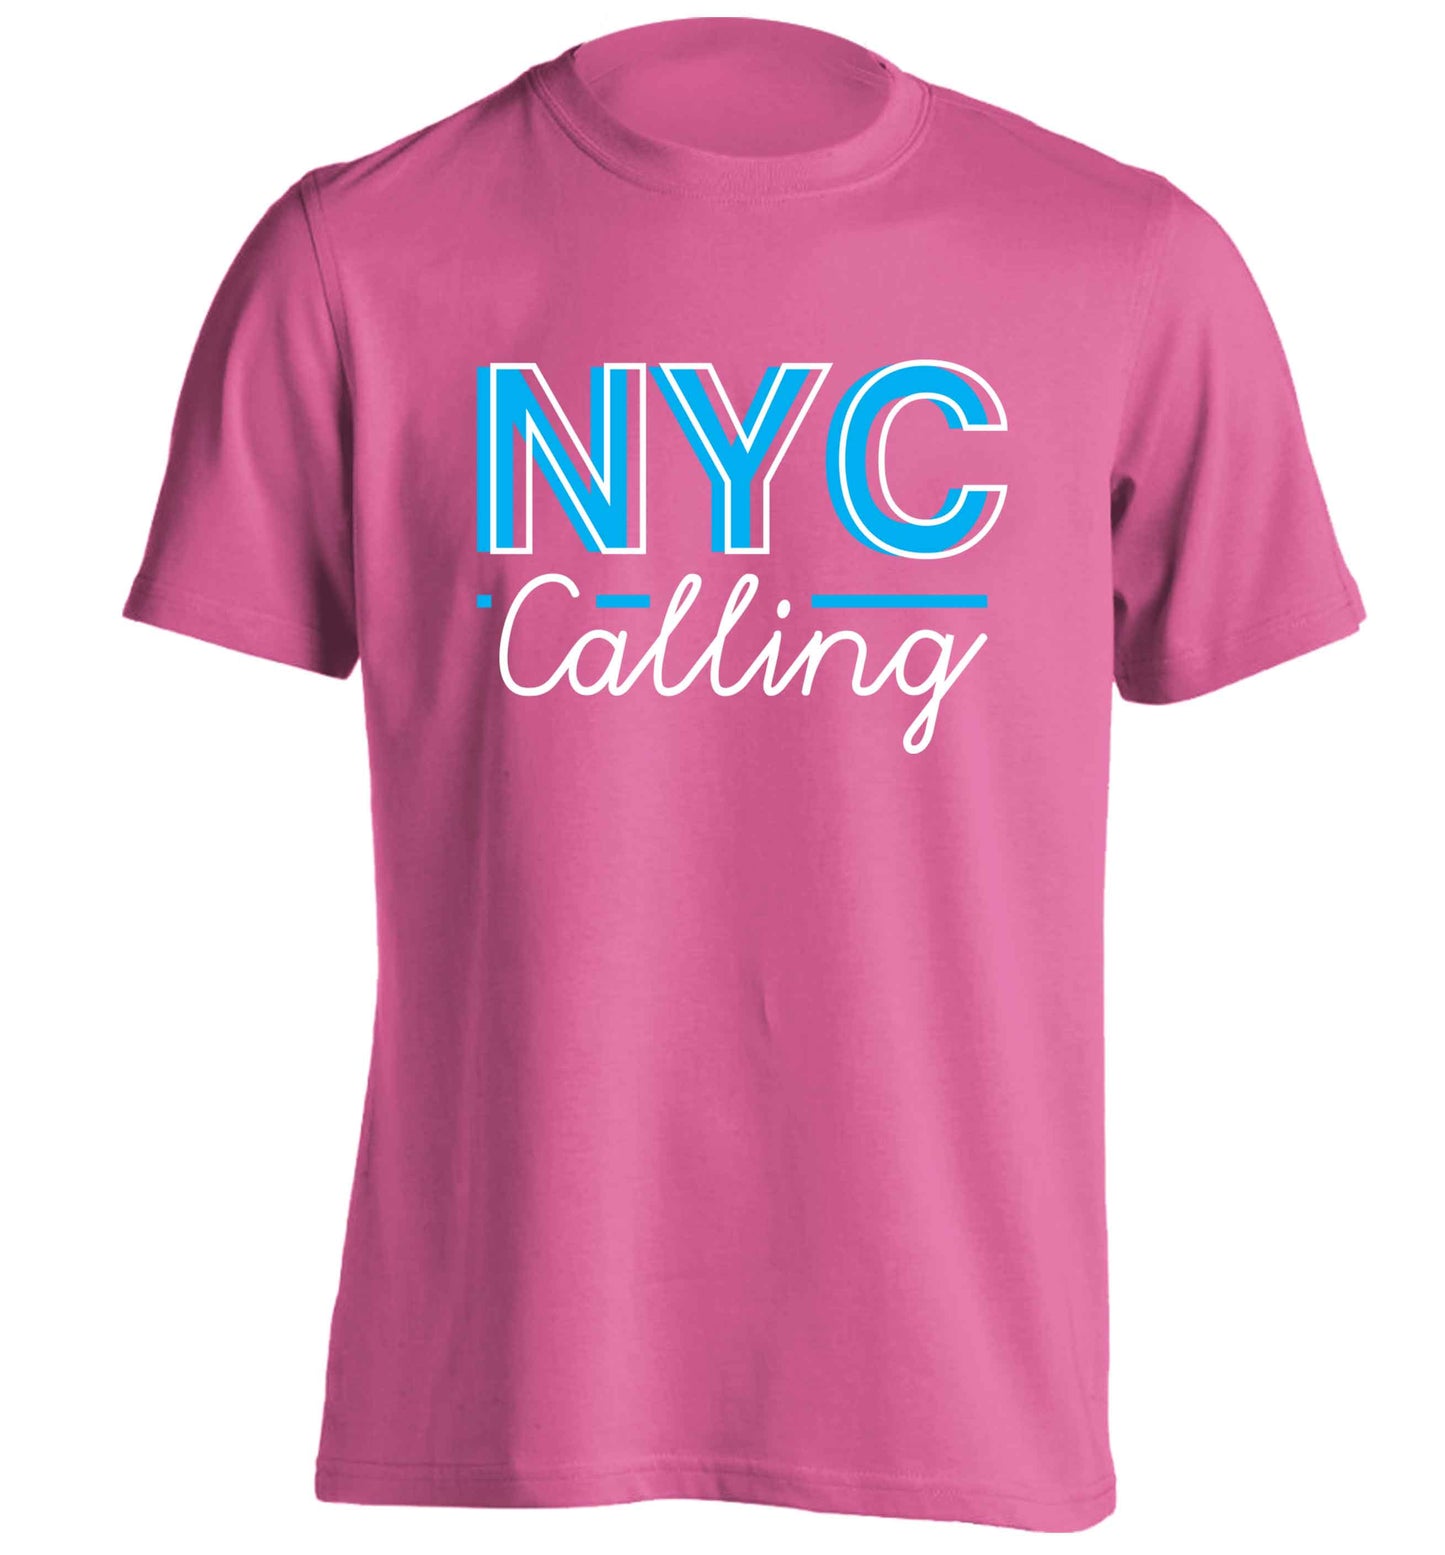 NYC calling adults unisex pink Tshirt 2XL